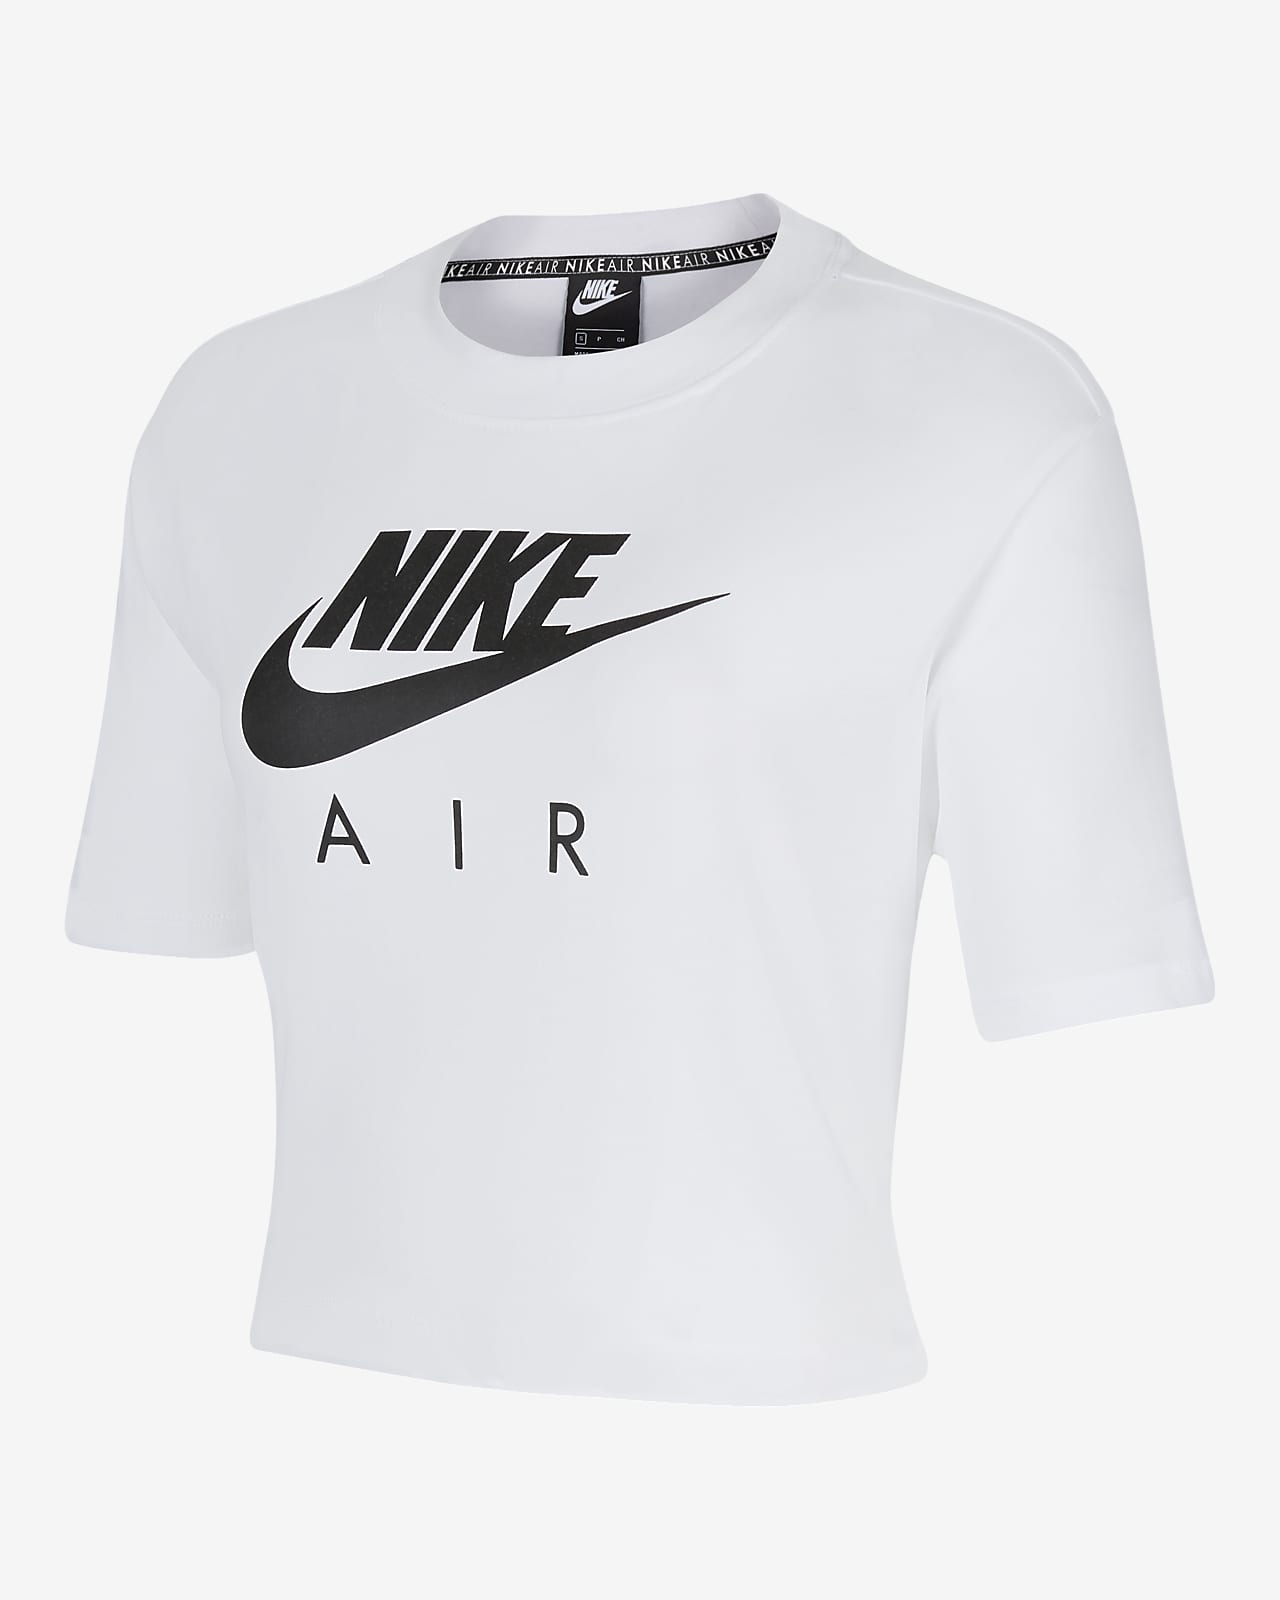 Nike Air Women's Short-Sleeve Top. Nike ID